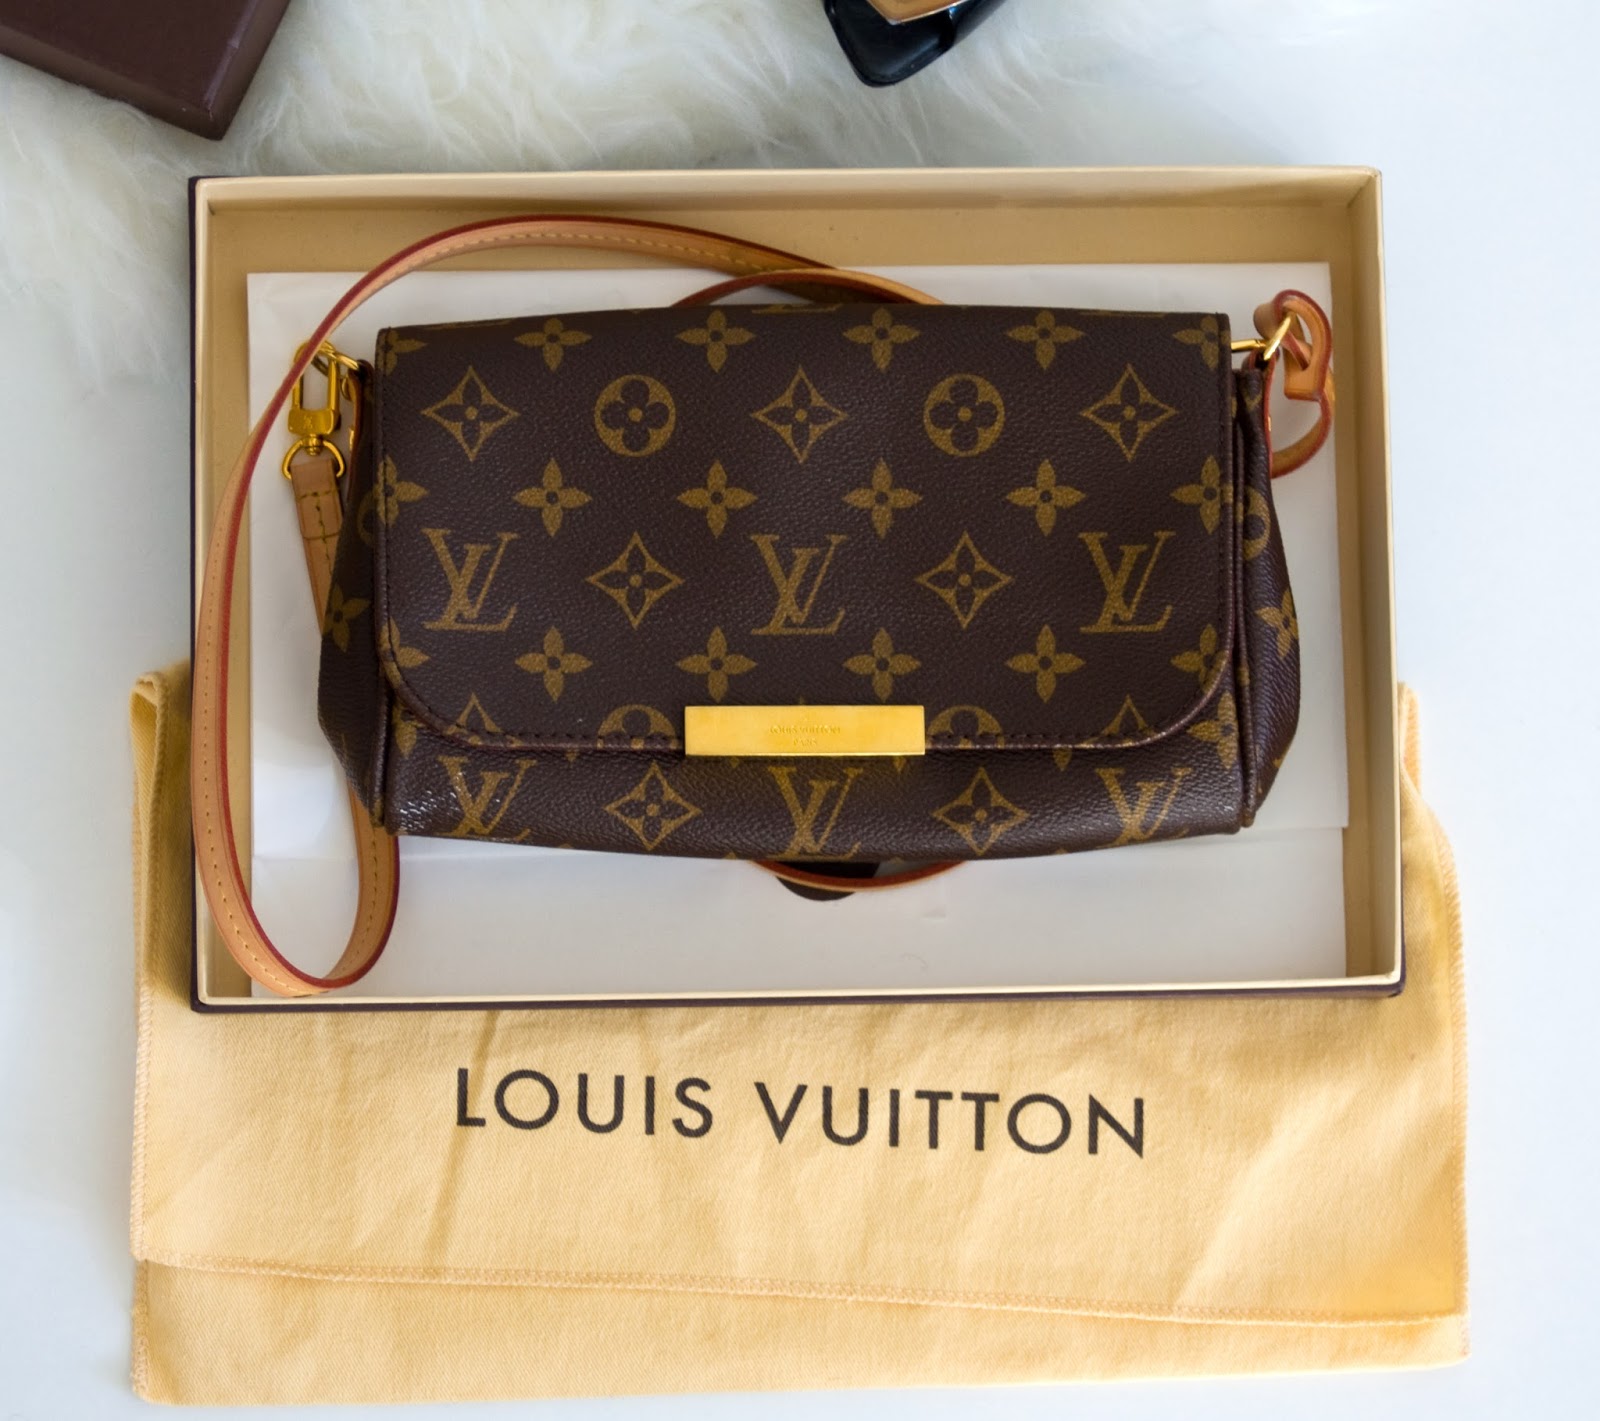 Kupuj z drugiej ręki Louis Vuitton